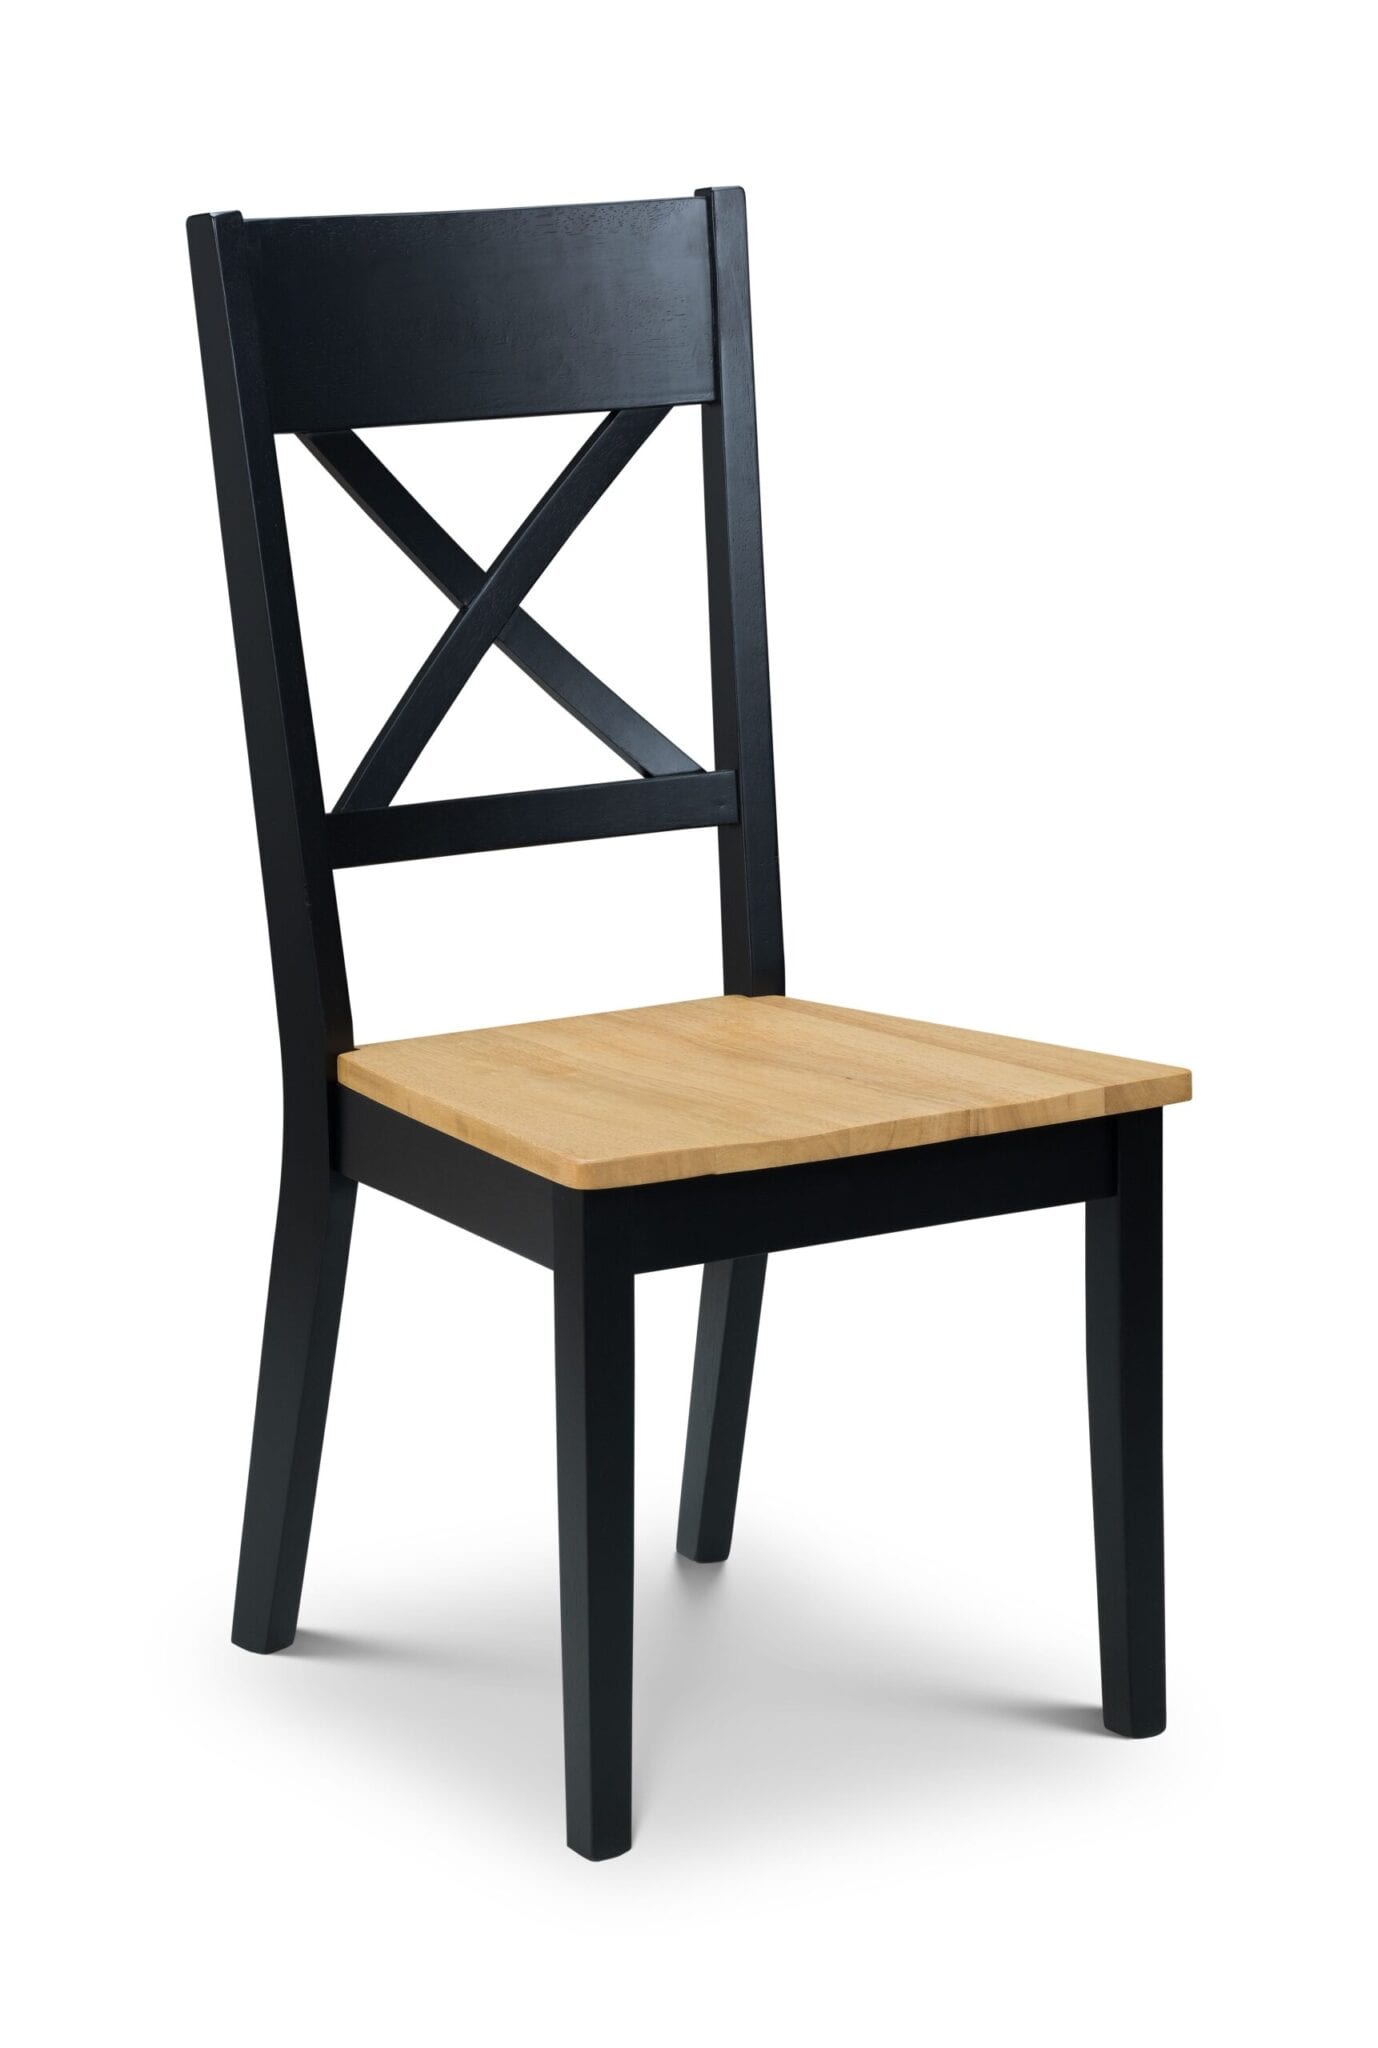 Hackney Chair Black/Oak